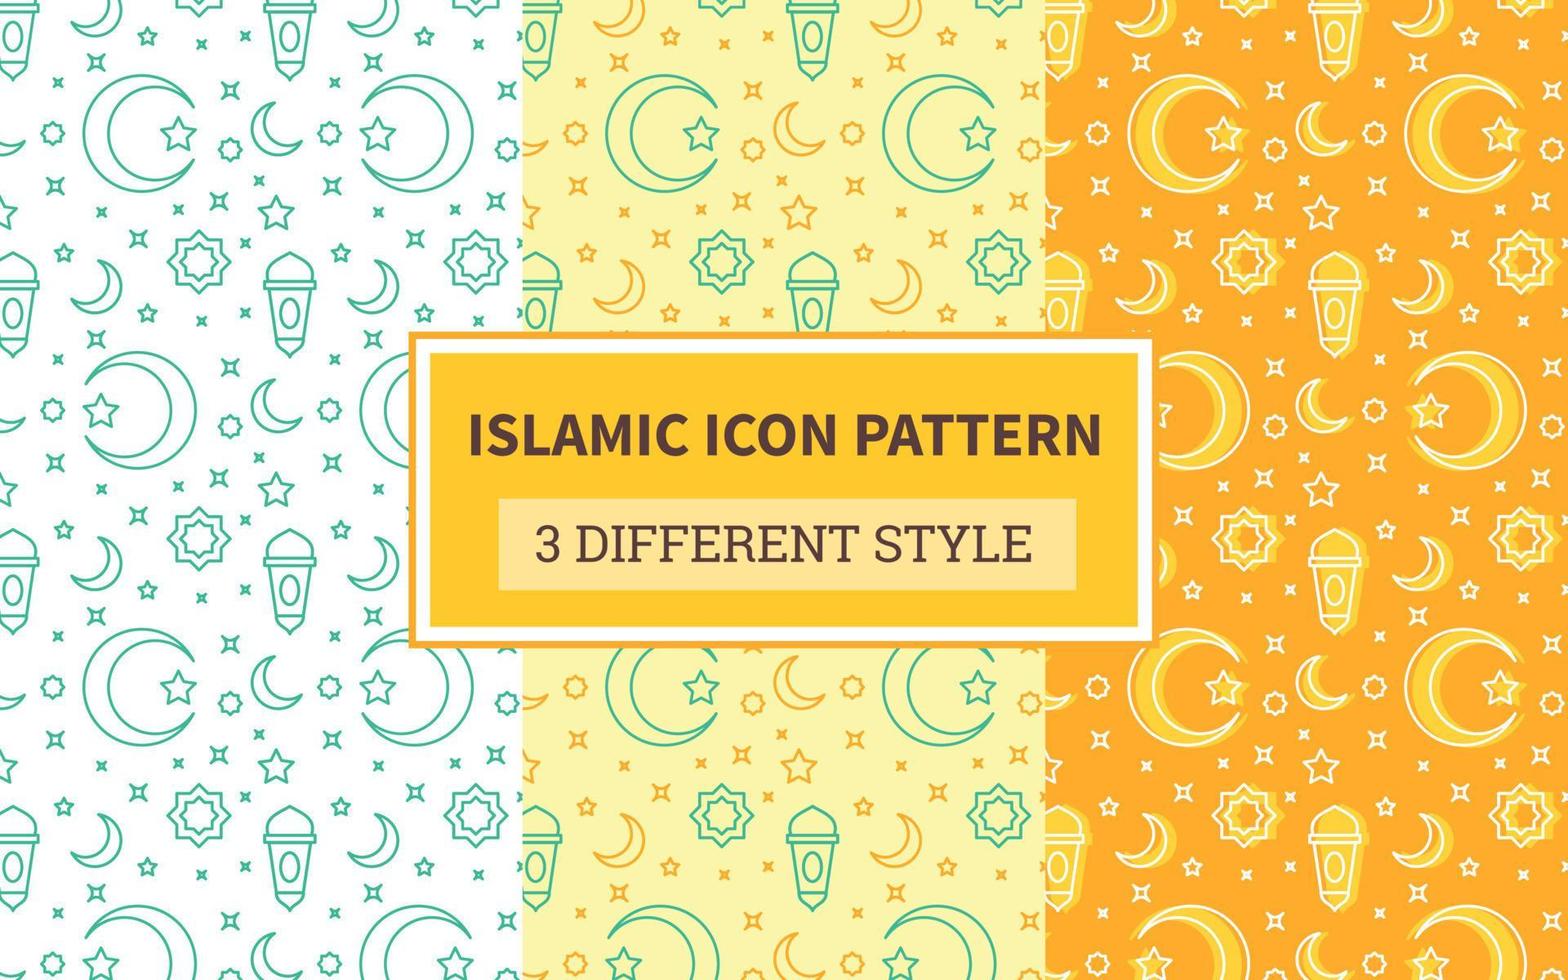 Islamic icon pattern lantern crescent moon ornament star with bundling version three different style flat design vector